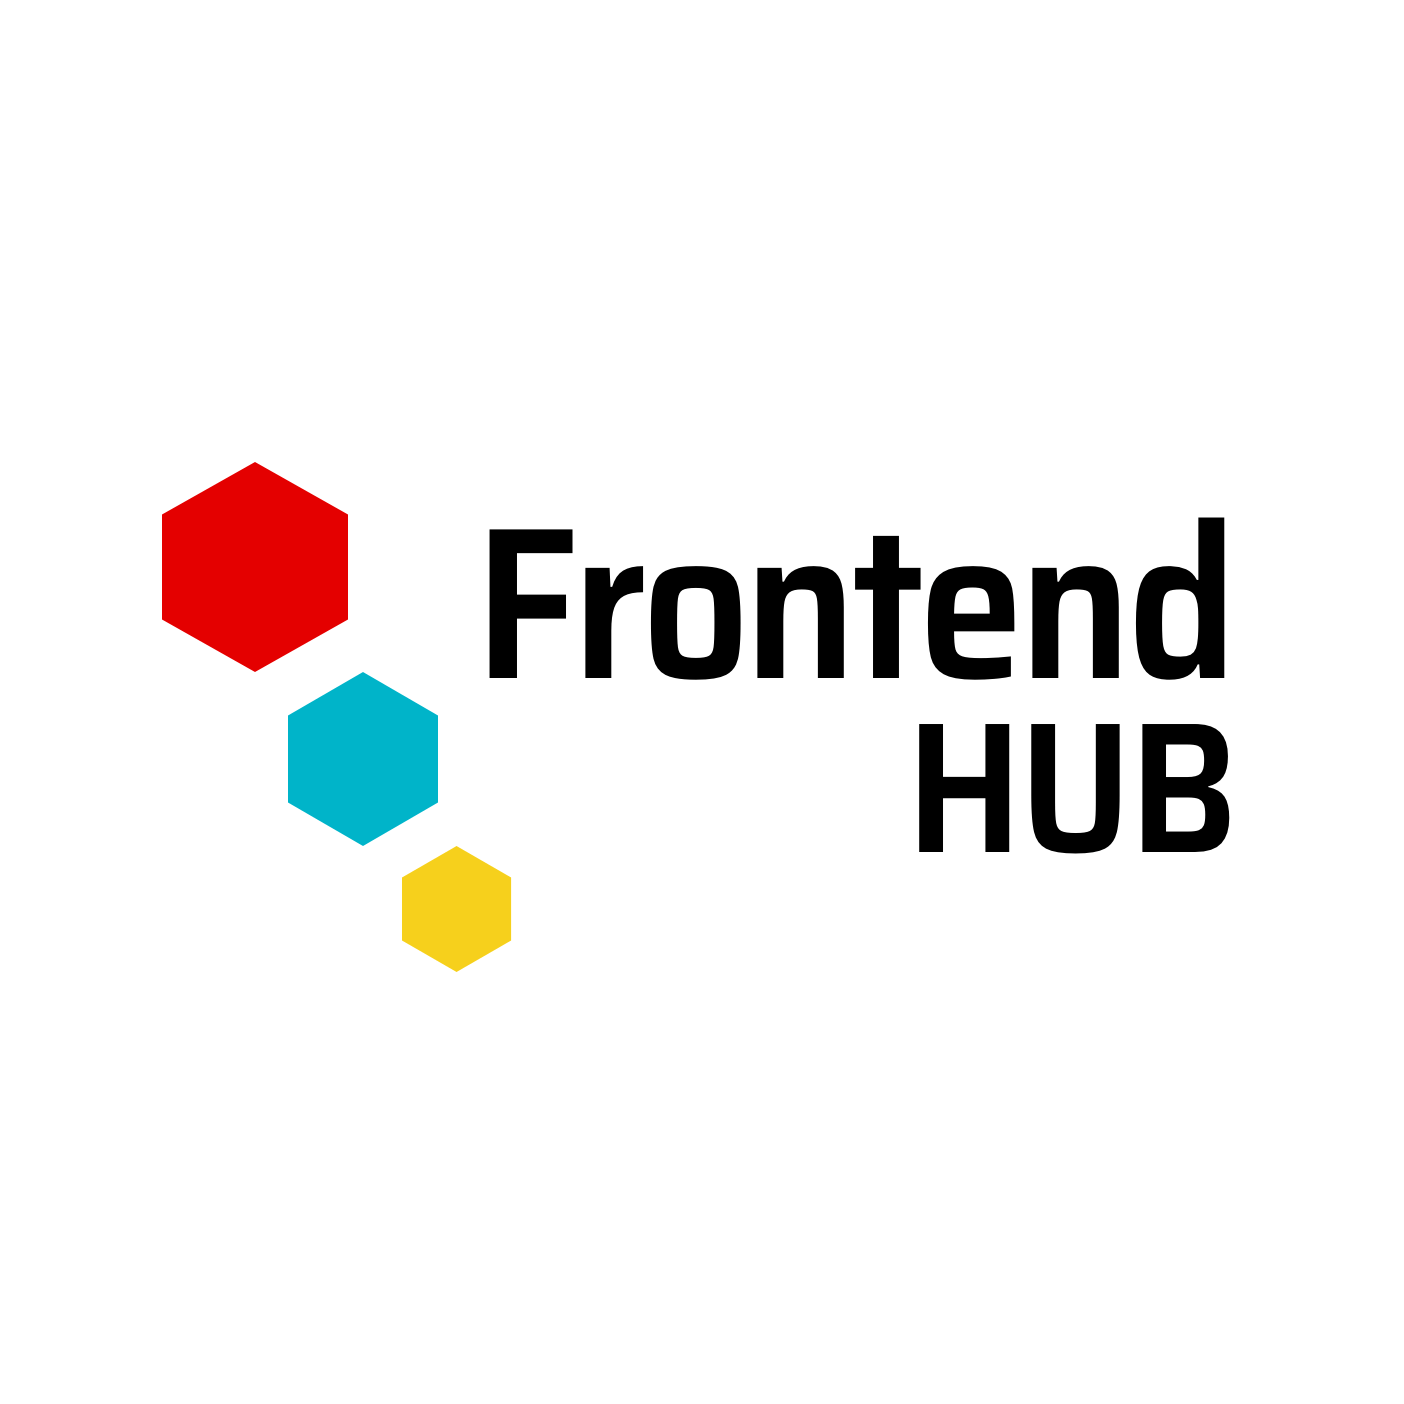 Frontend Hub